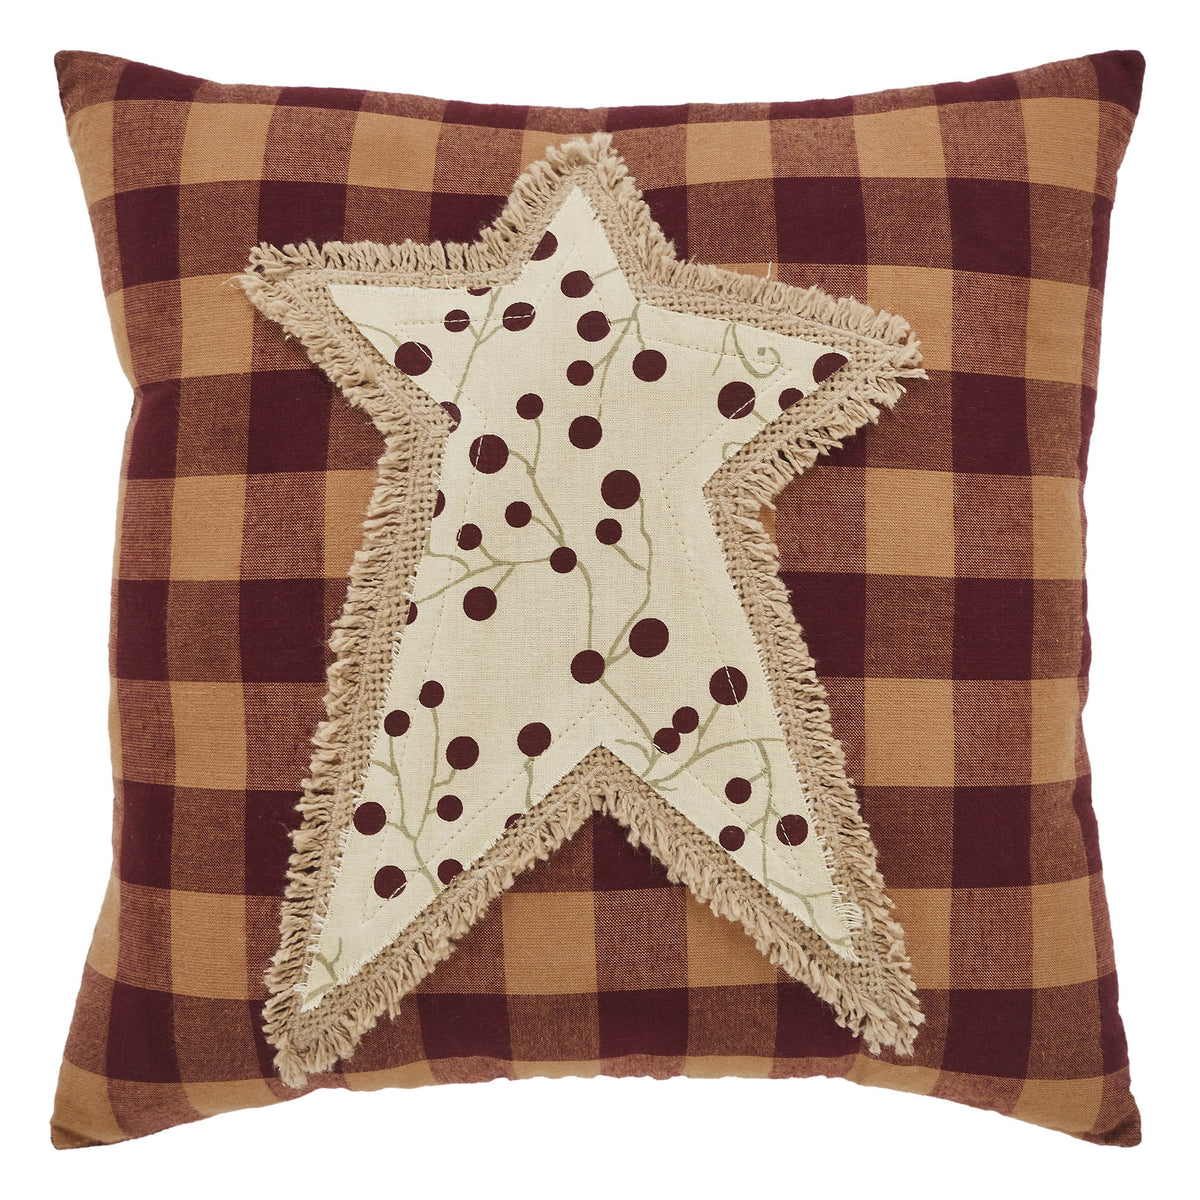 Pip Vinestar Primitive Star Pillow 12x12